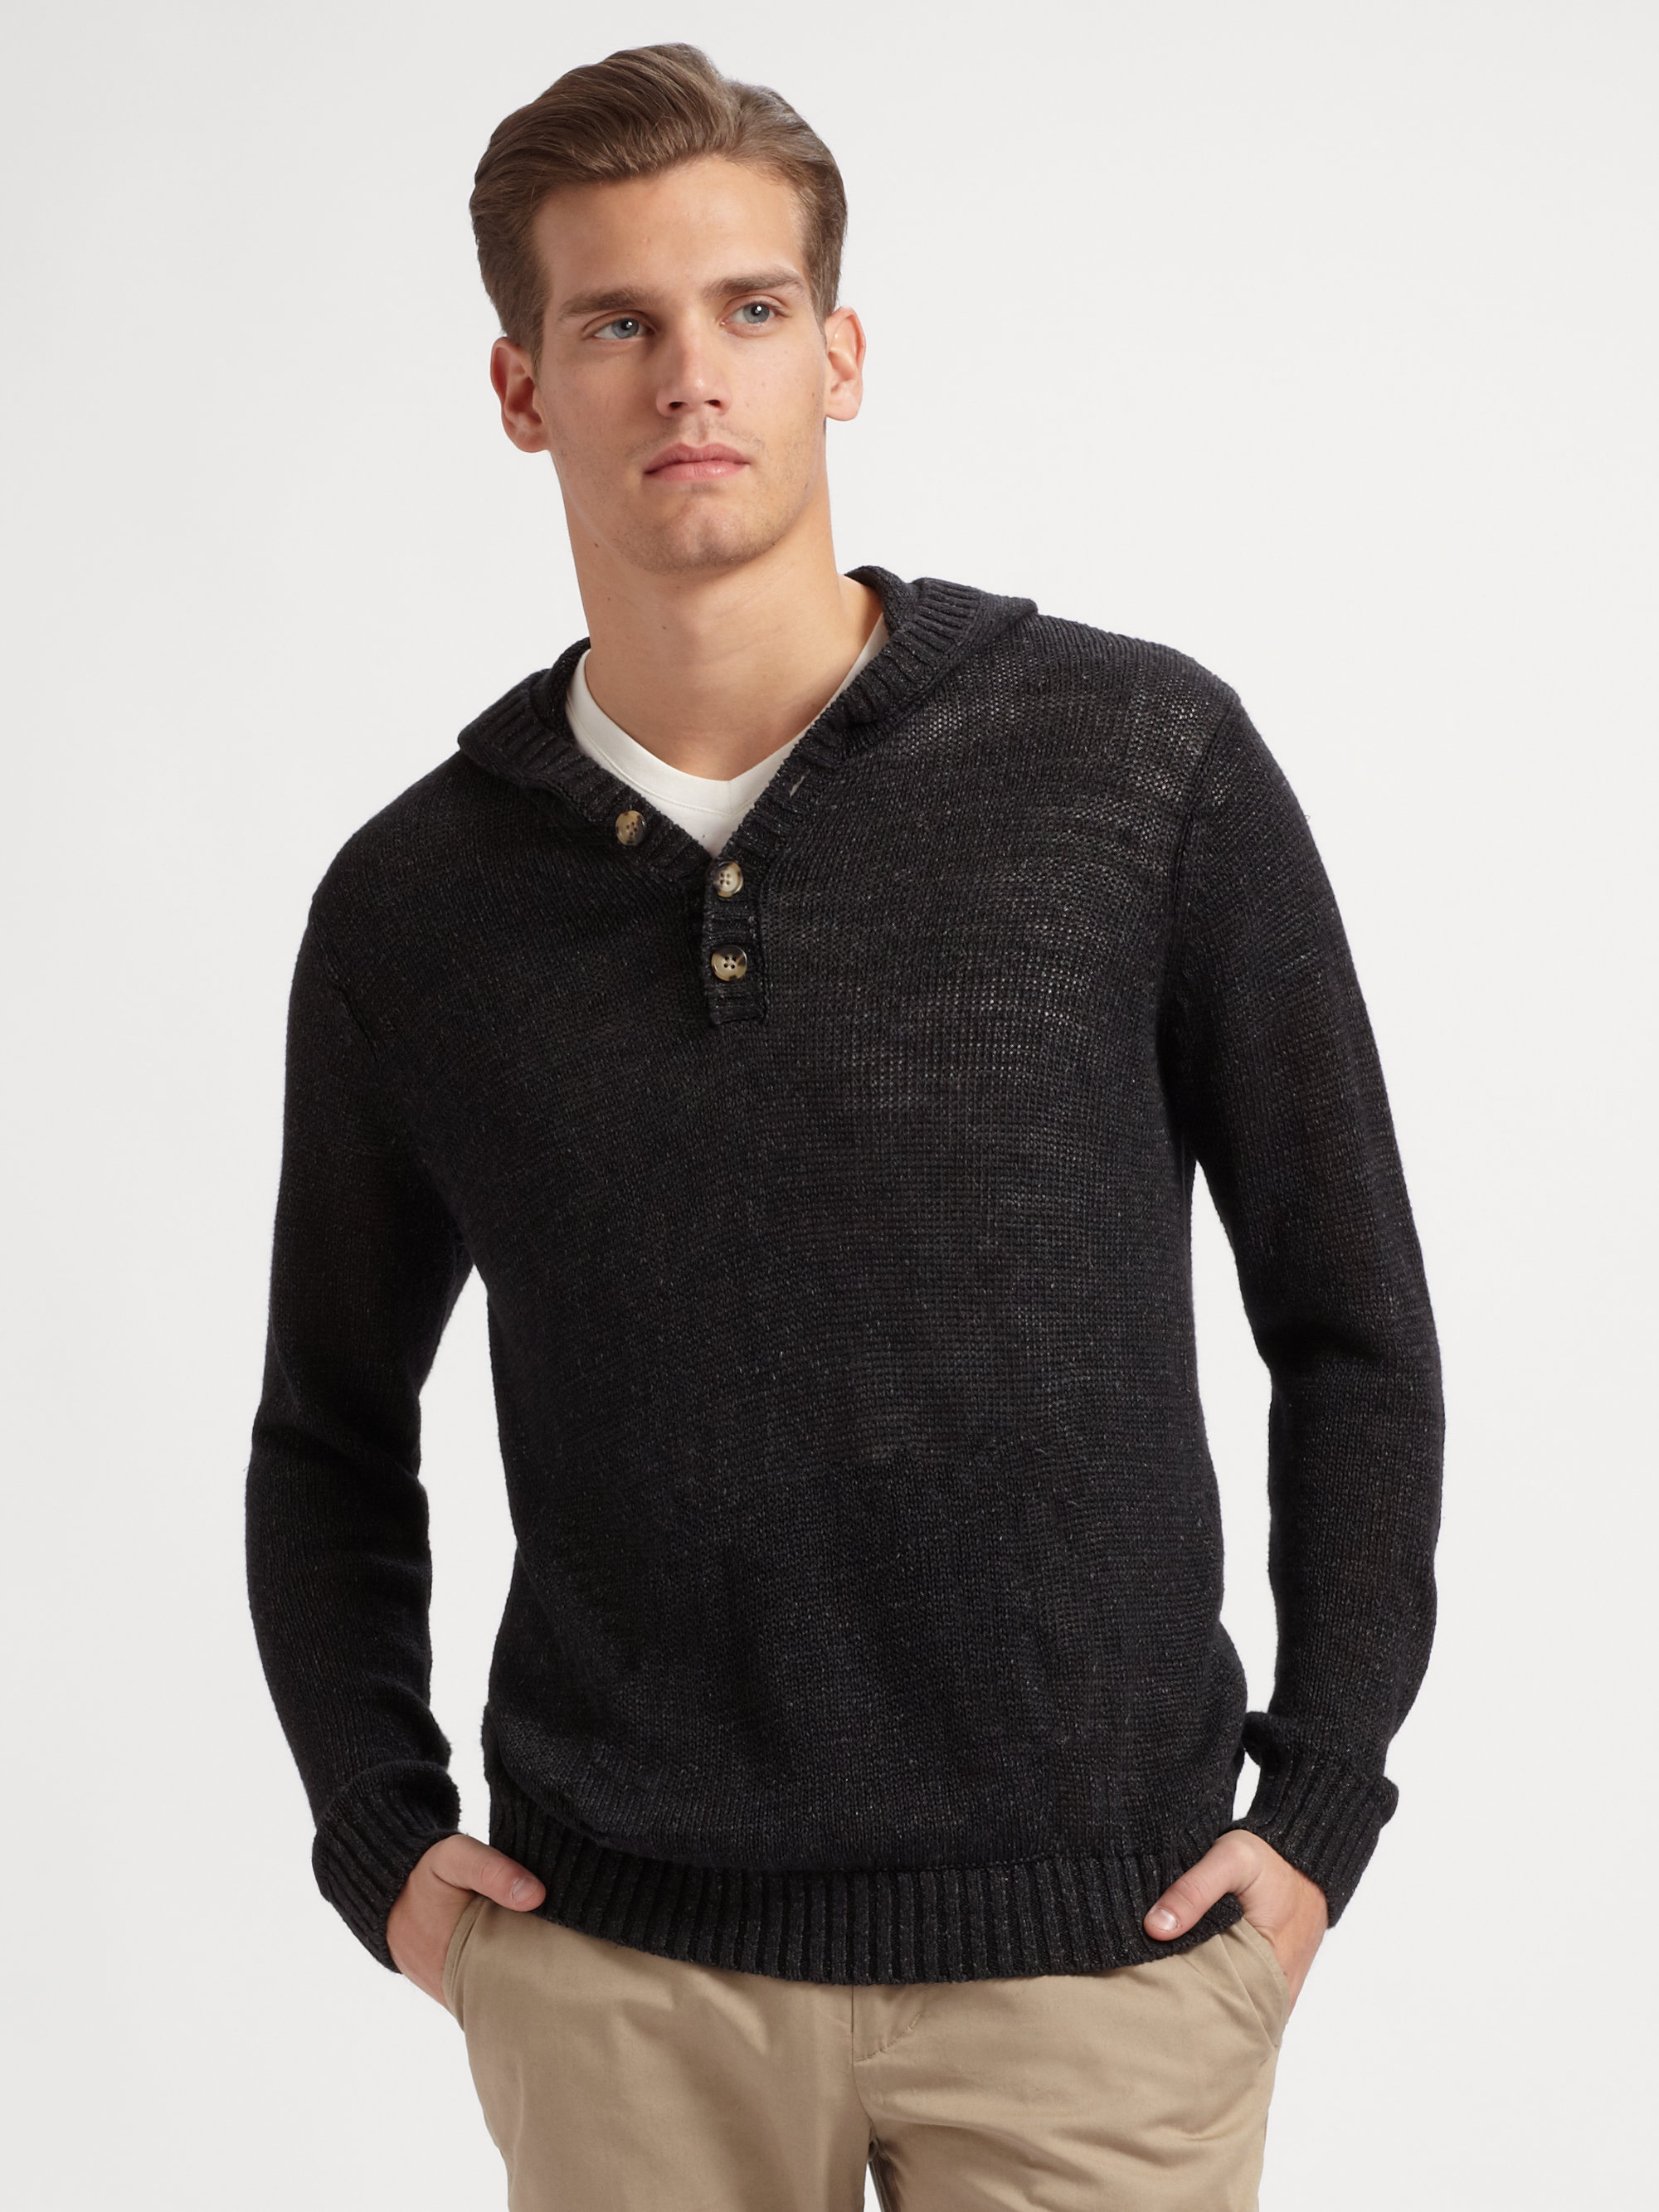 Lyst - Vince Hooded Linen Henley Sweater in Black for Men